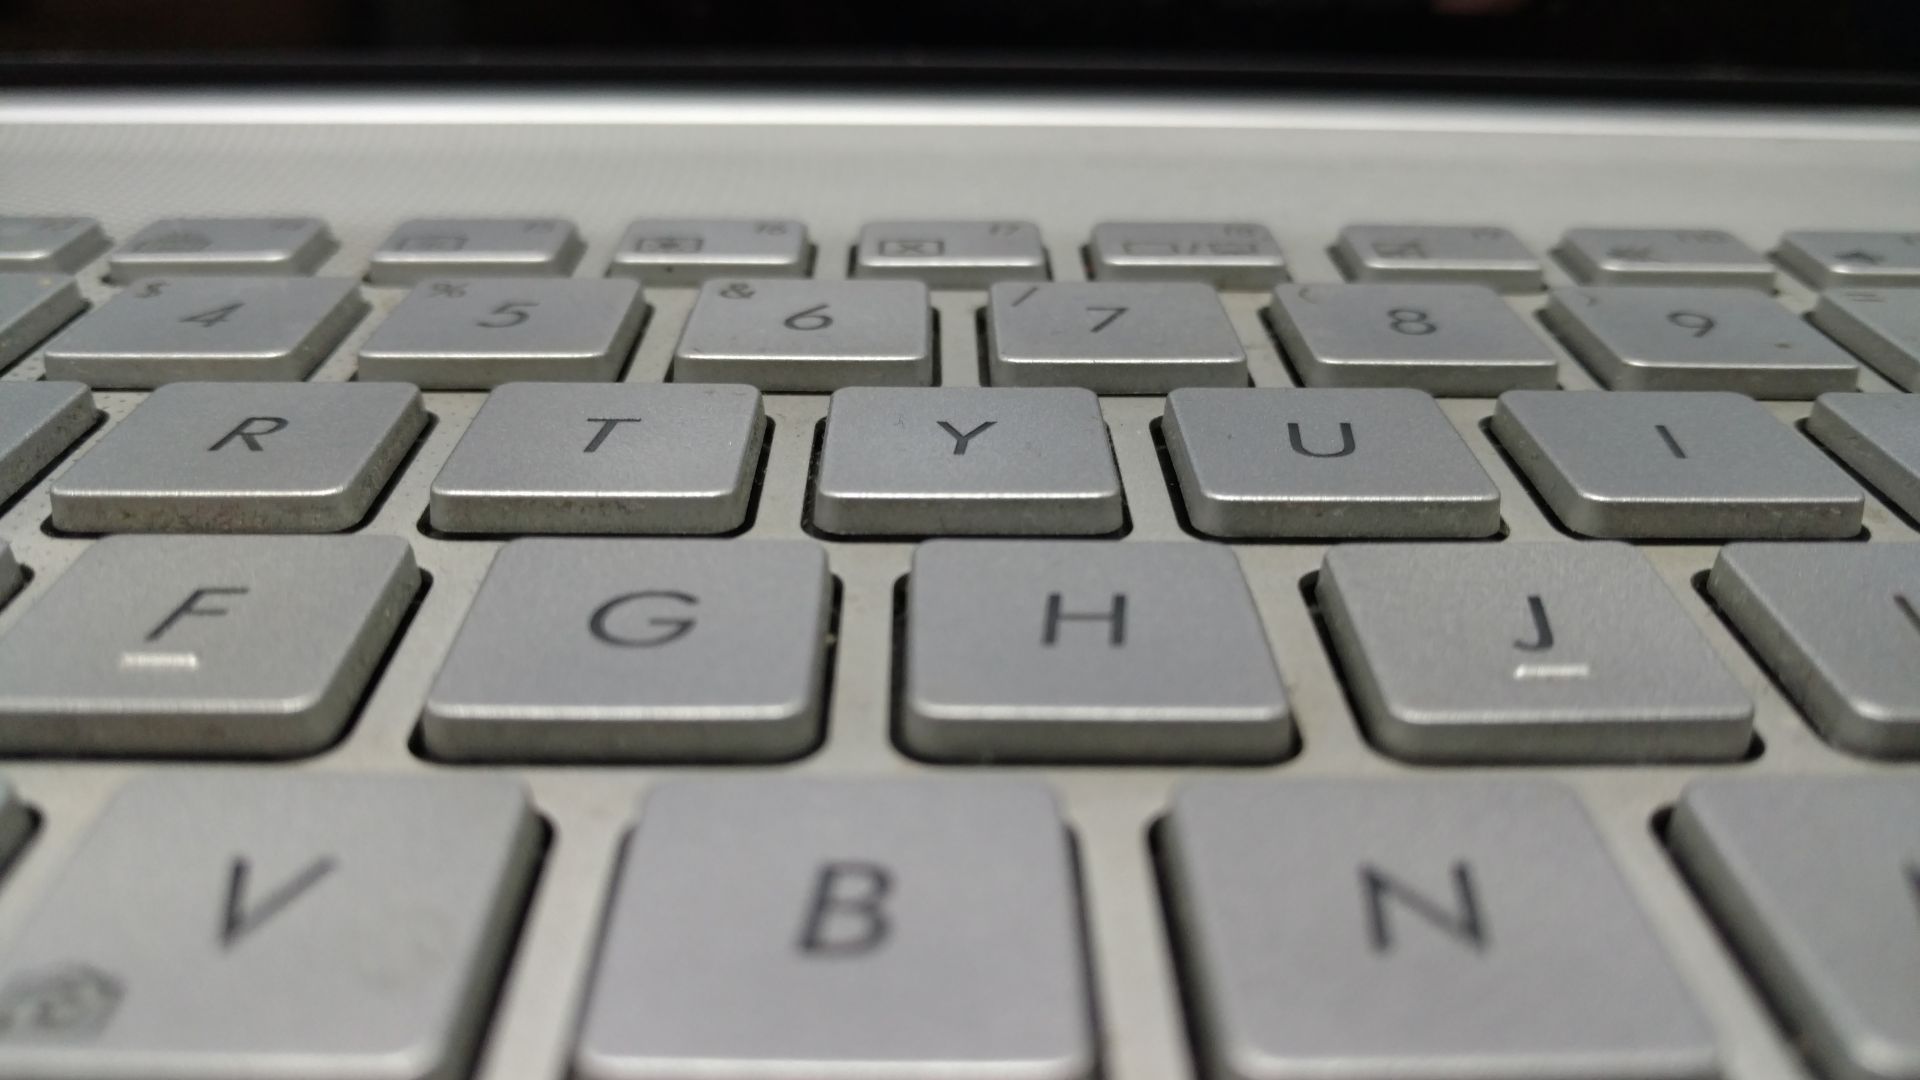 Desktop Wallpaper Keyboard Laptop Letter Buttons, HD Image, Picture, Background, Yorgzn